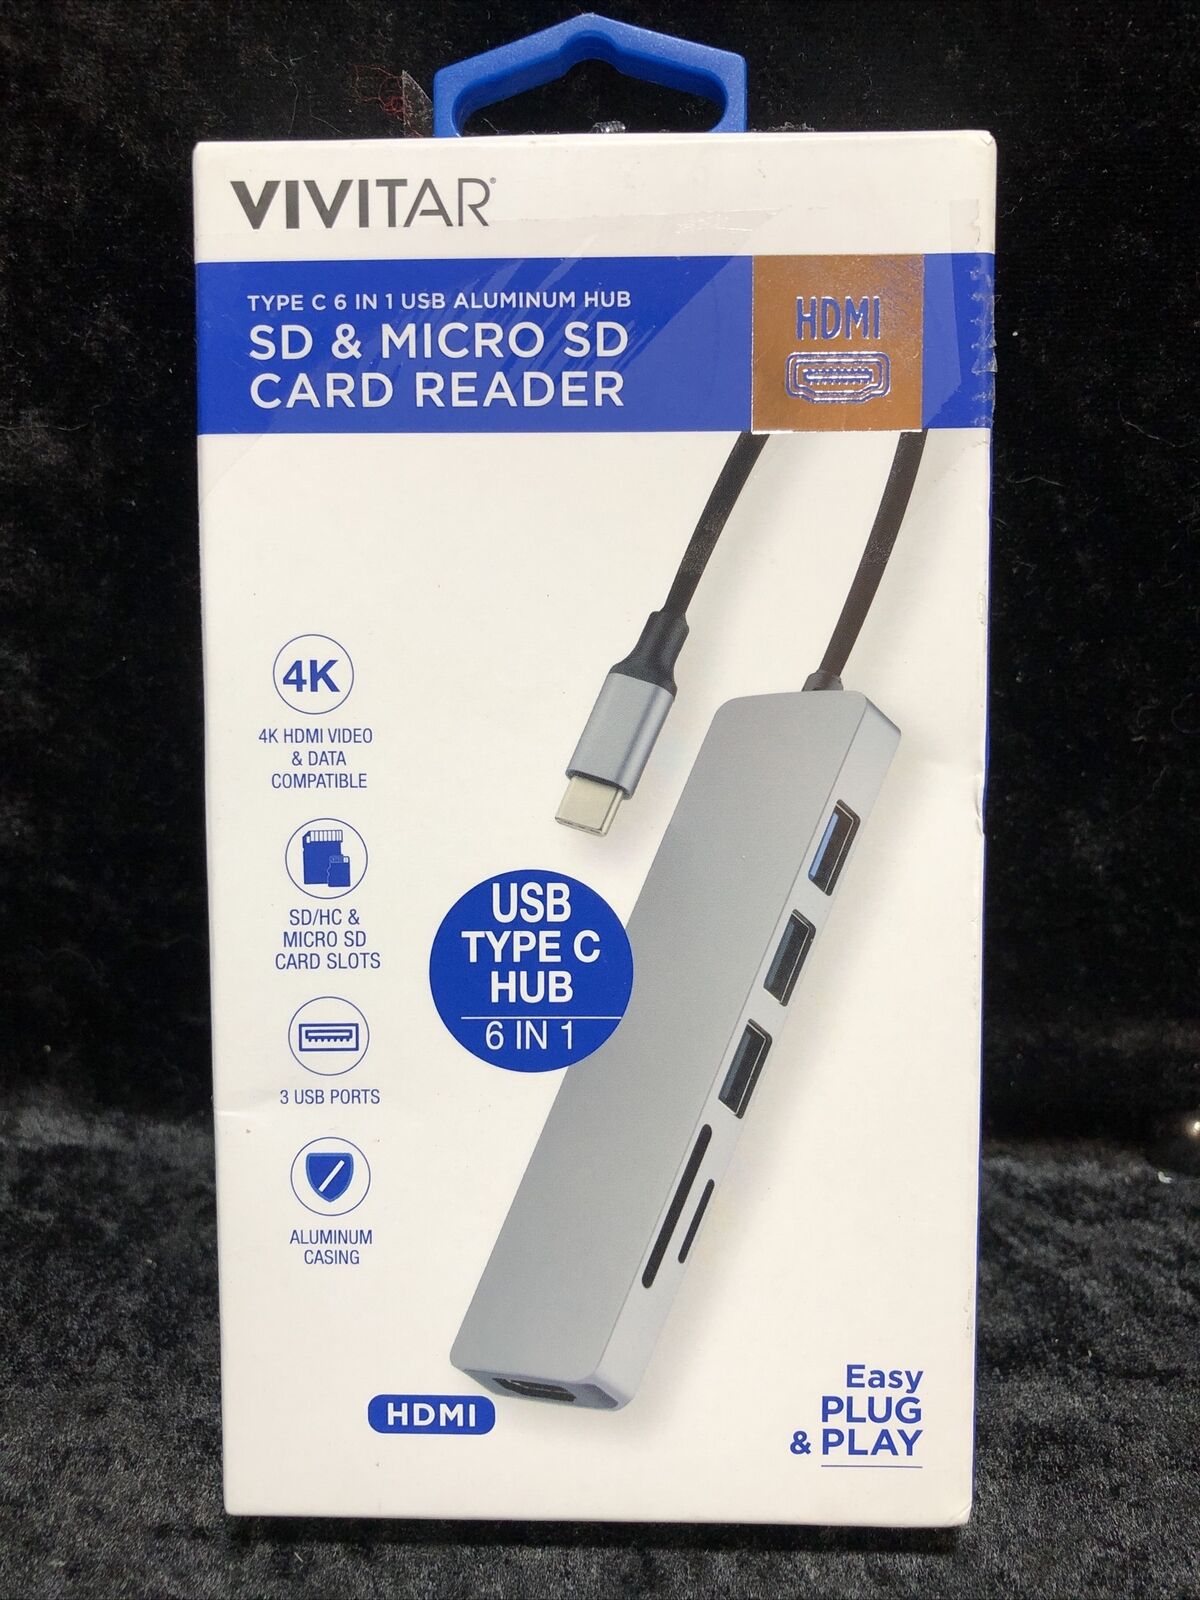 Vivitar Creator Series Aluminum USB Type C Hub - SD & Micro SD Card Reader